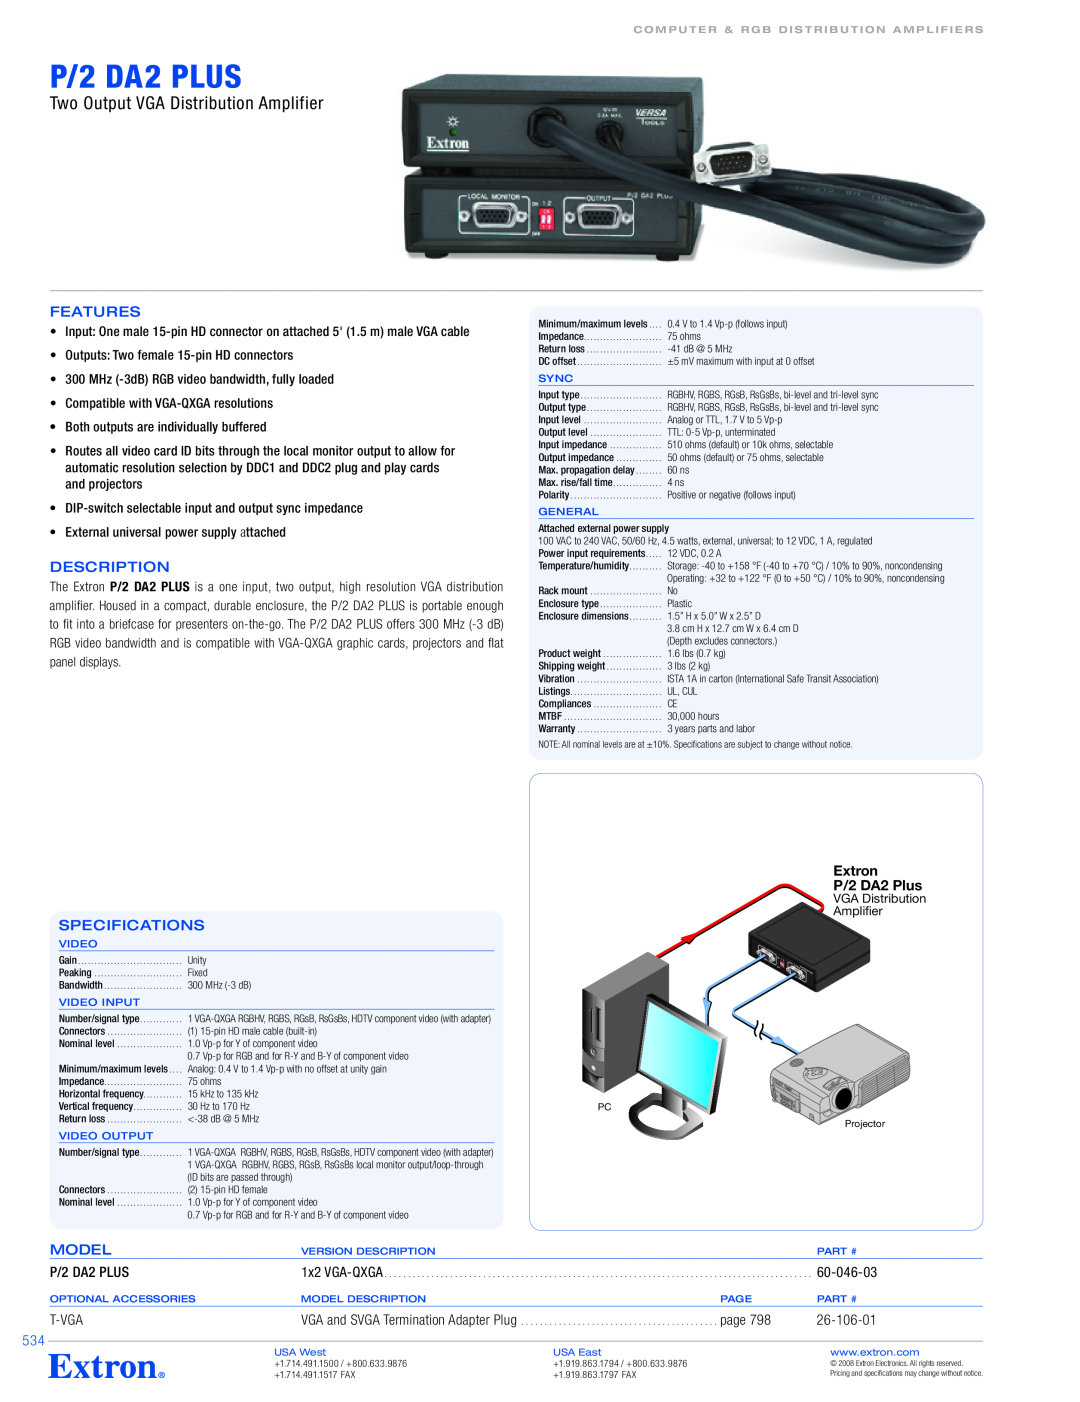 Extron electronic P/2 DA2 PLUS user manual P/2 DA2 Plus, Distribution Ampliﬁer, 68-1237-01 Rev. A, Extron Electronics, USA 